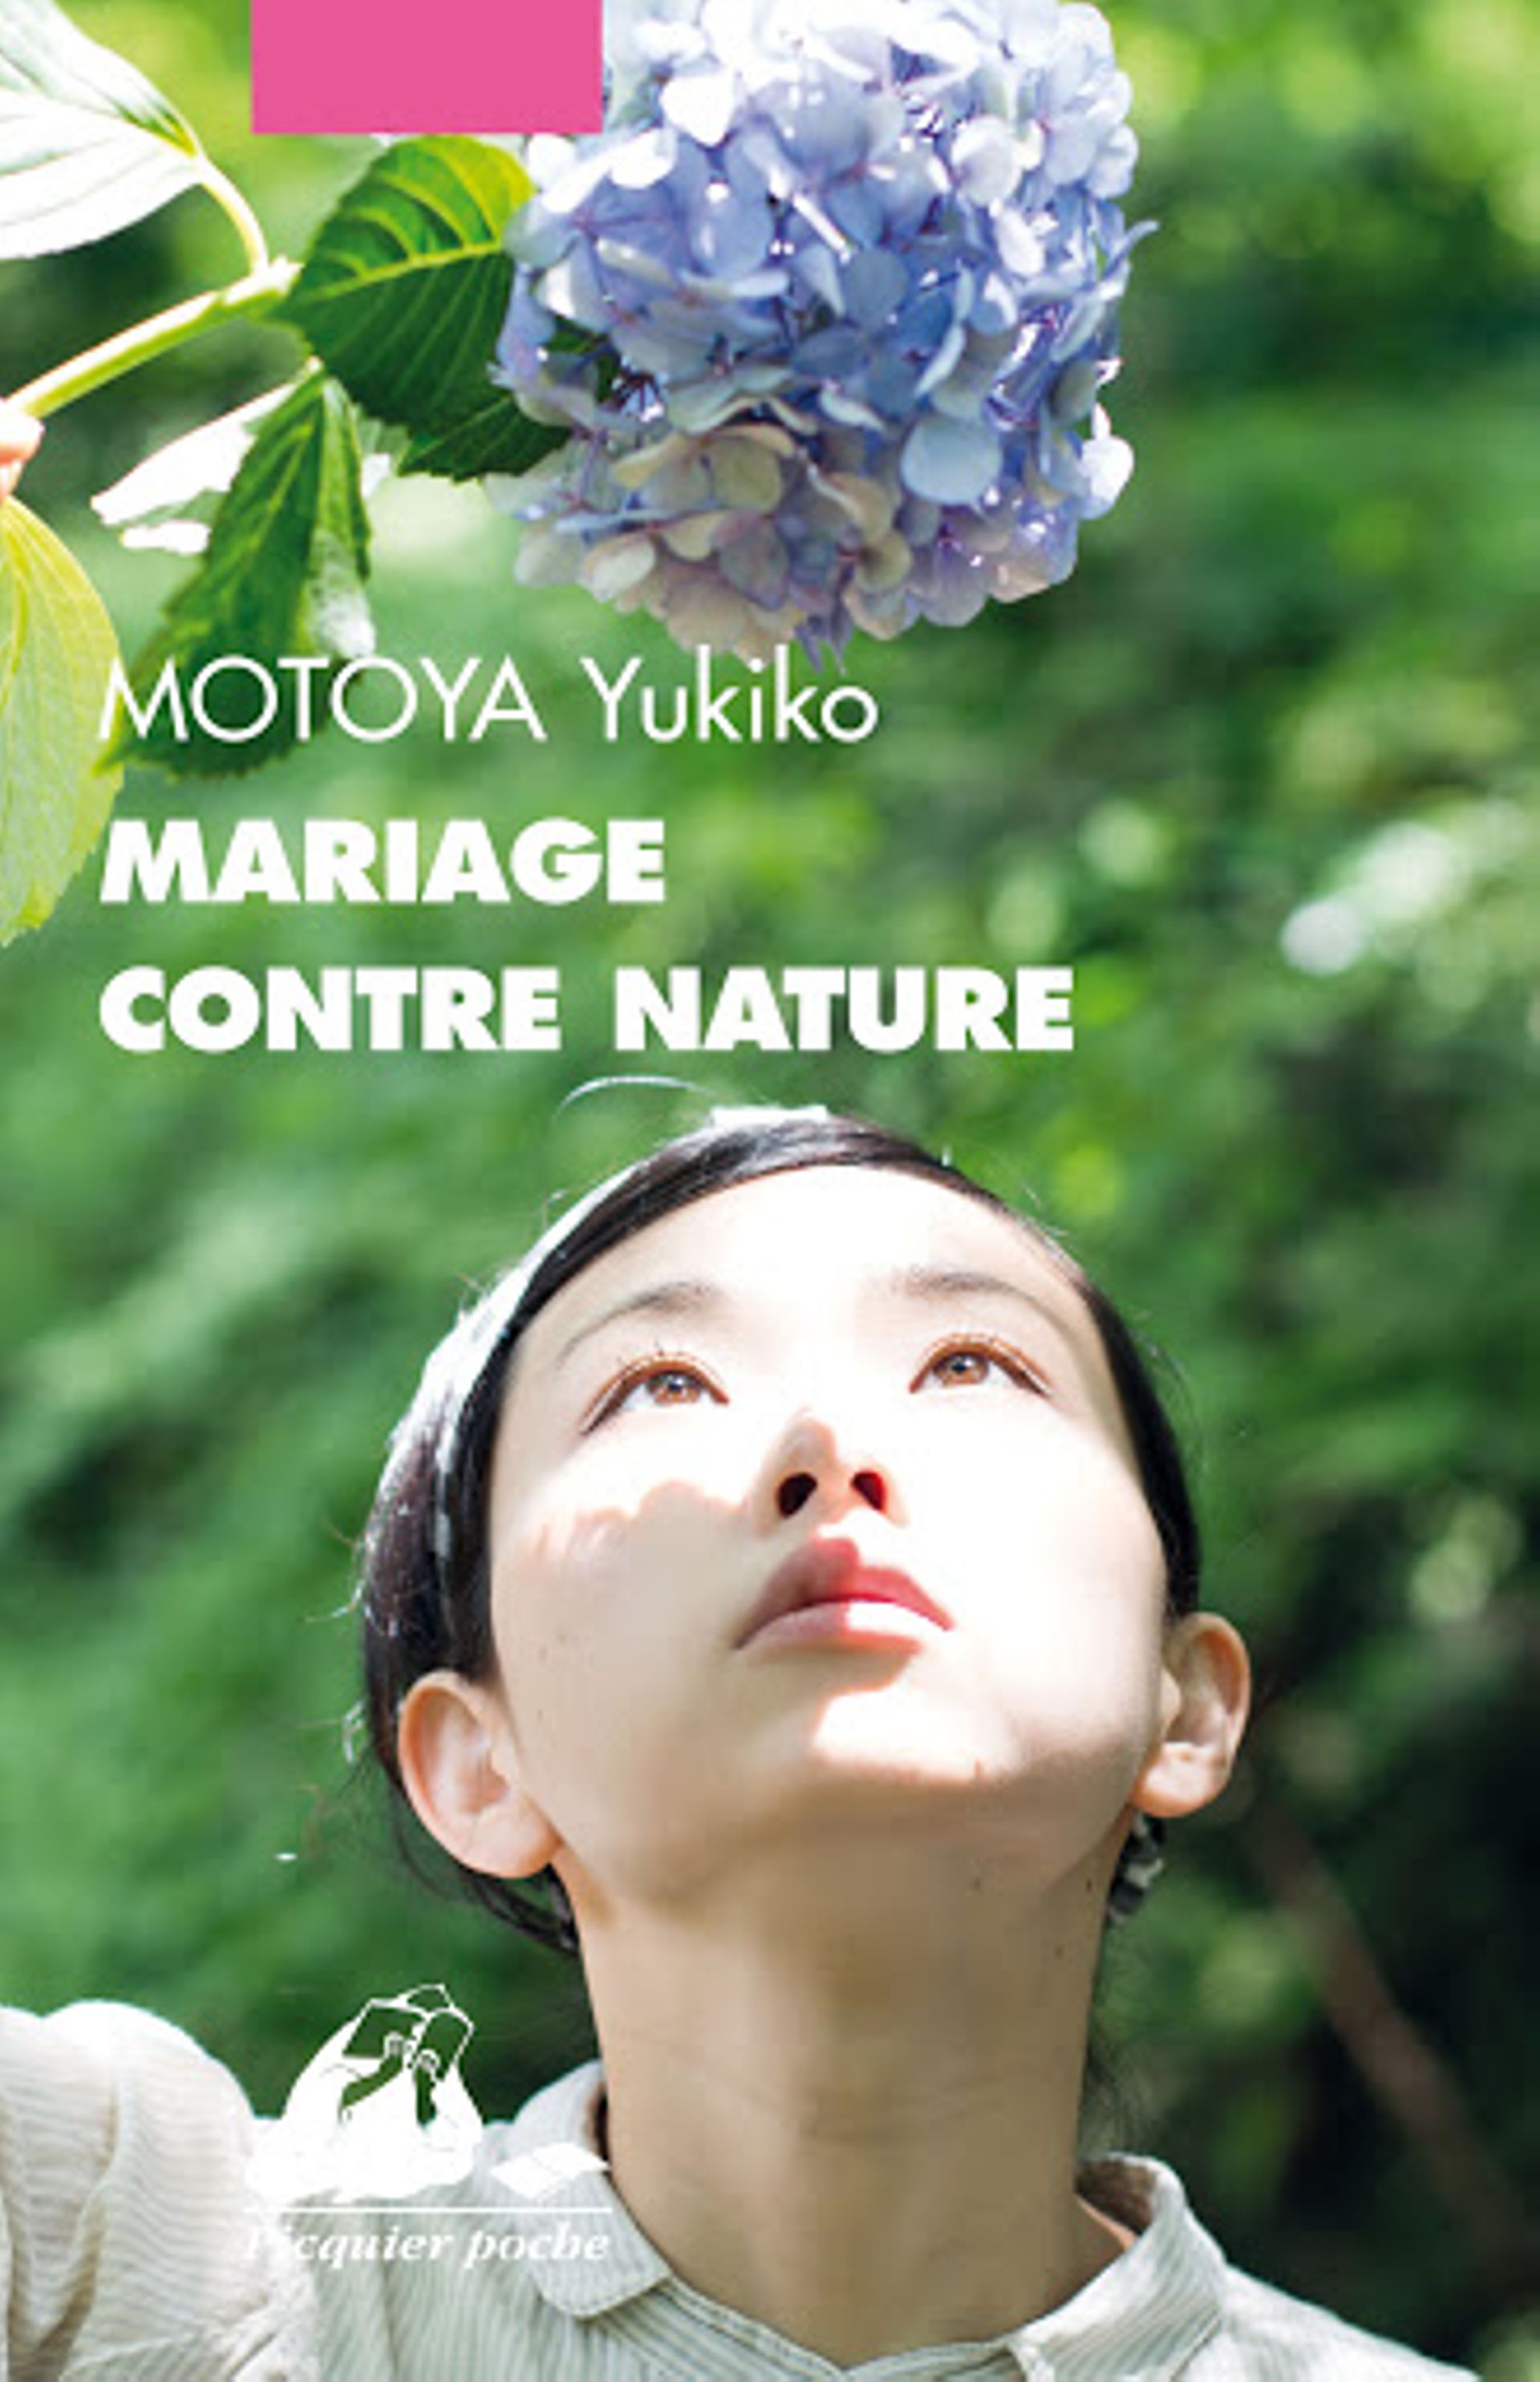 "Mariage contre nature" de Motoya Yukiko (Philippe Picquier)